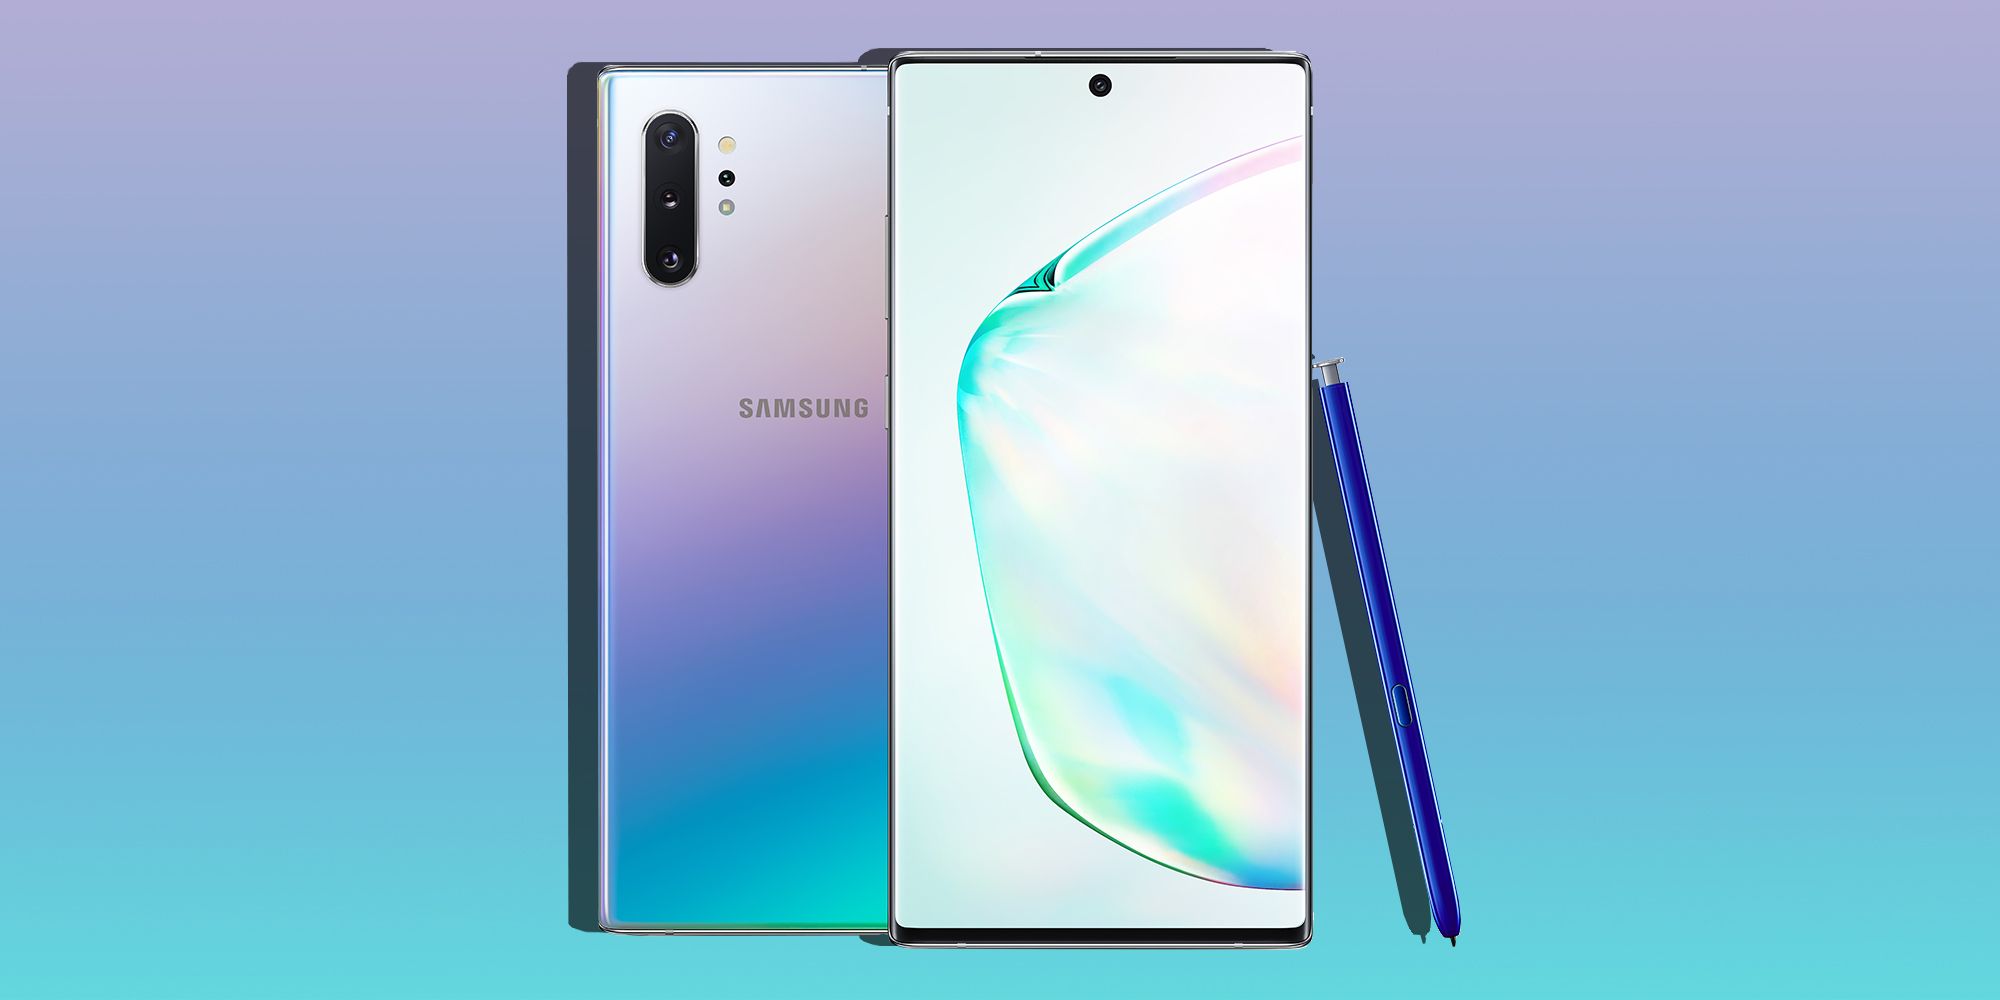 Samsung Phone Comparison Chart 2019